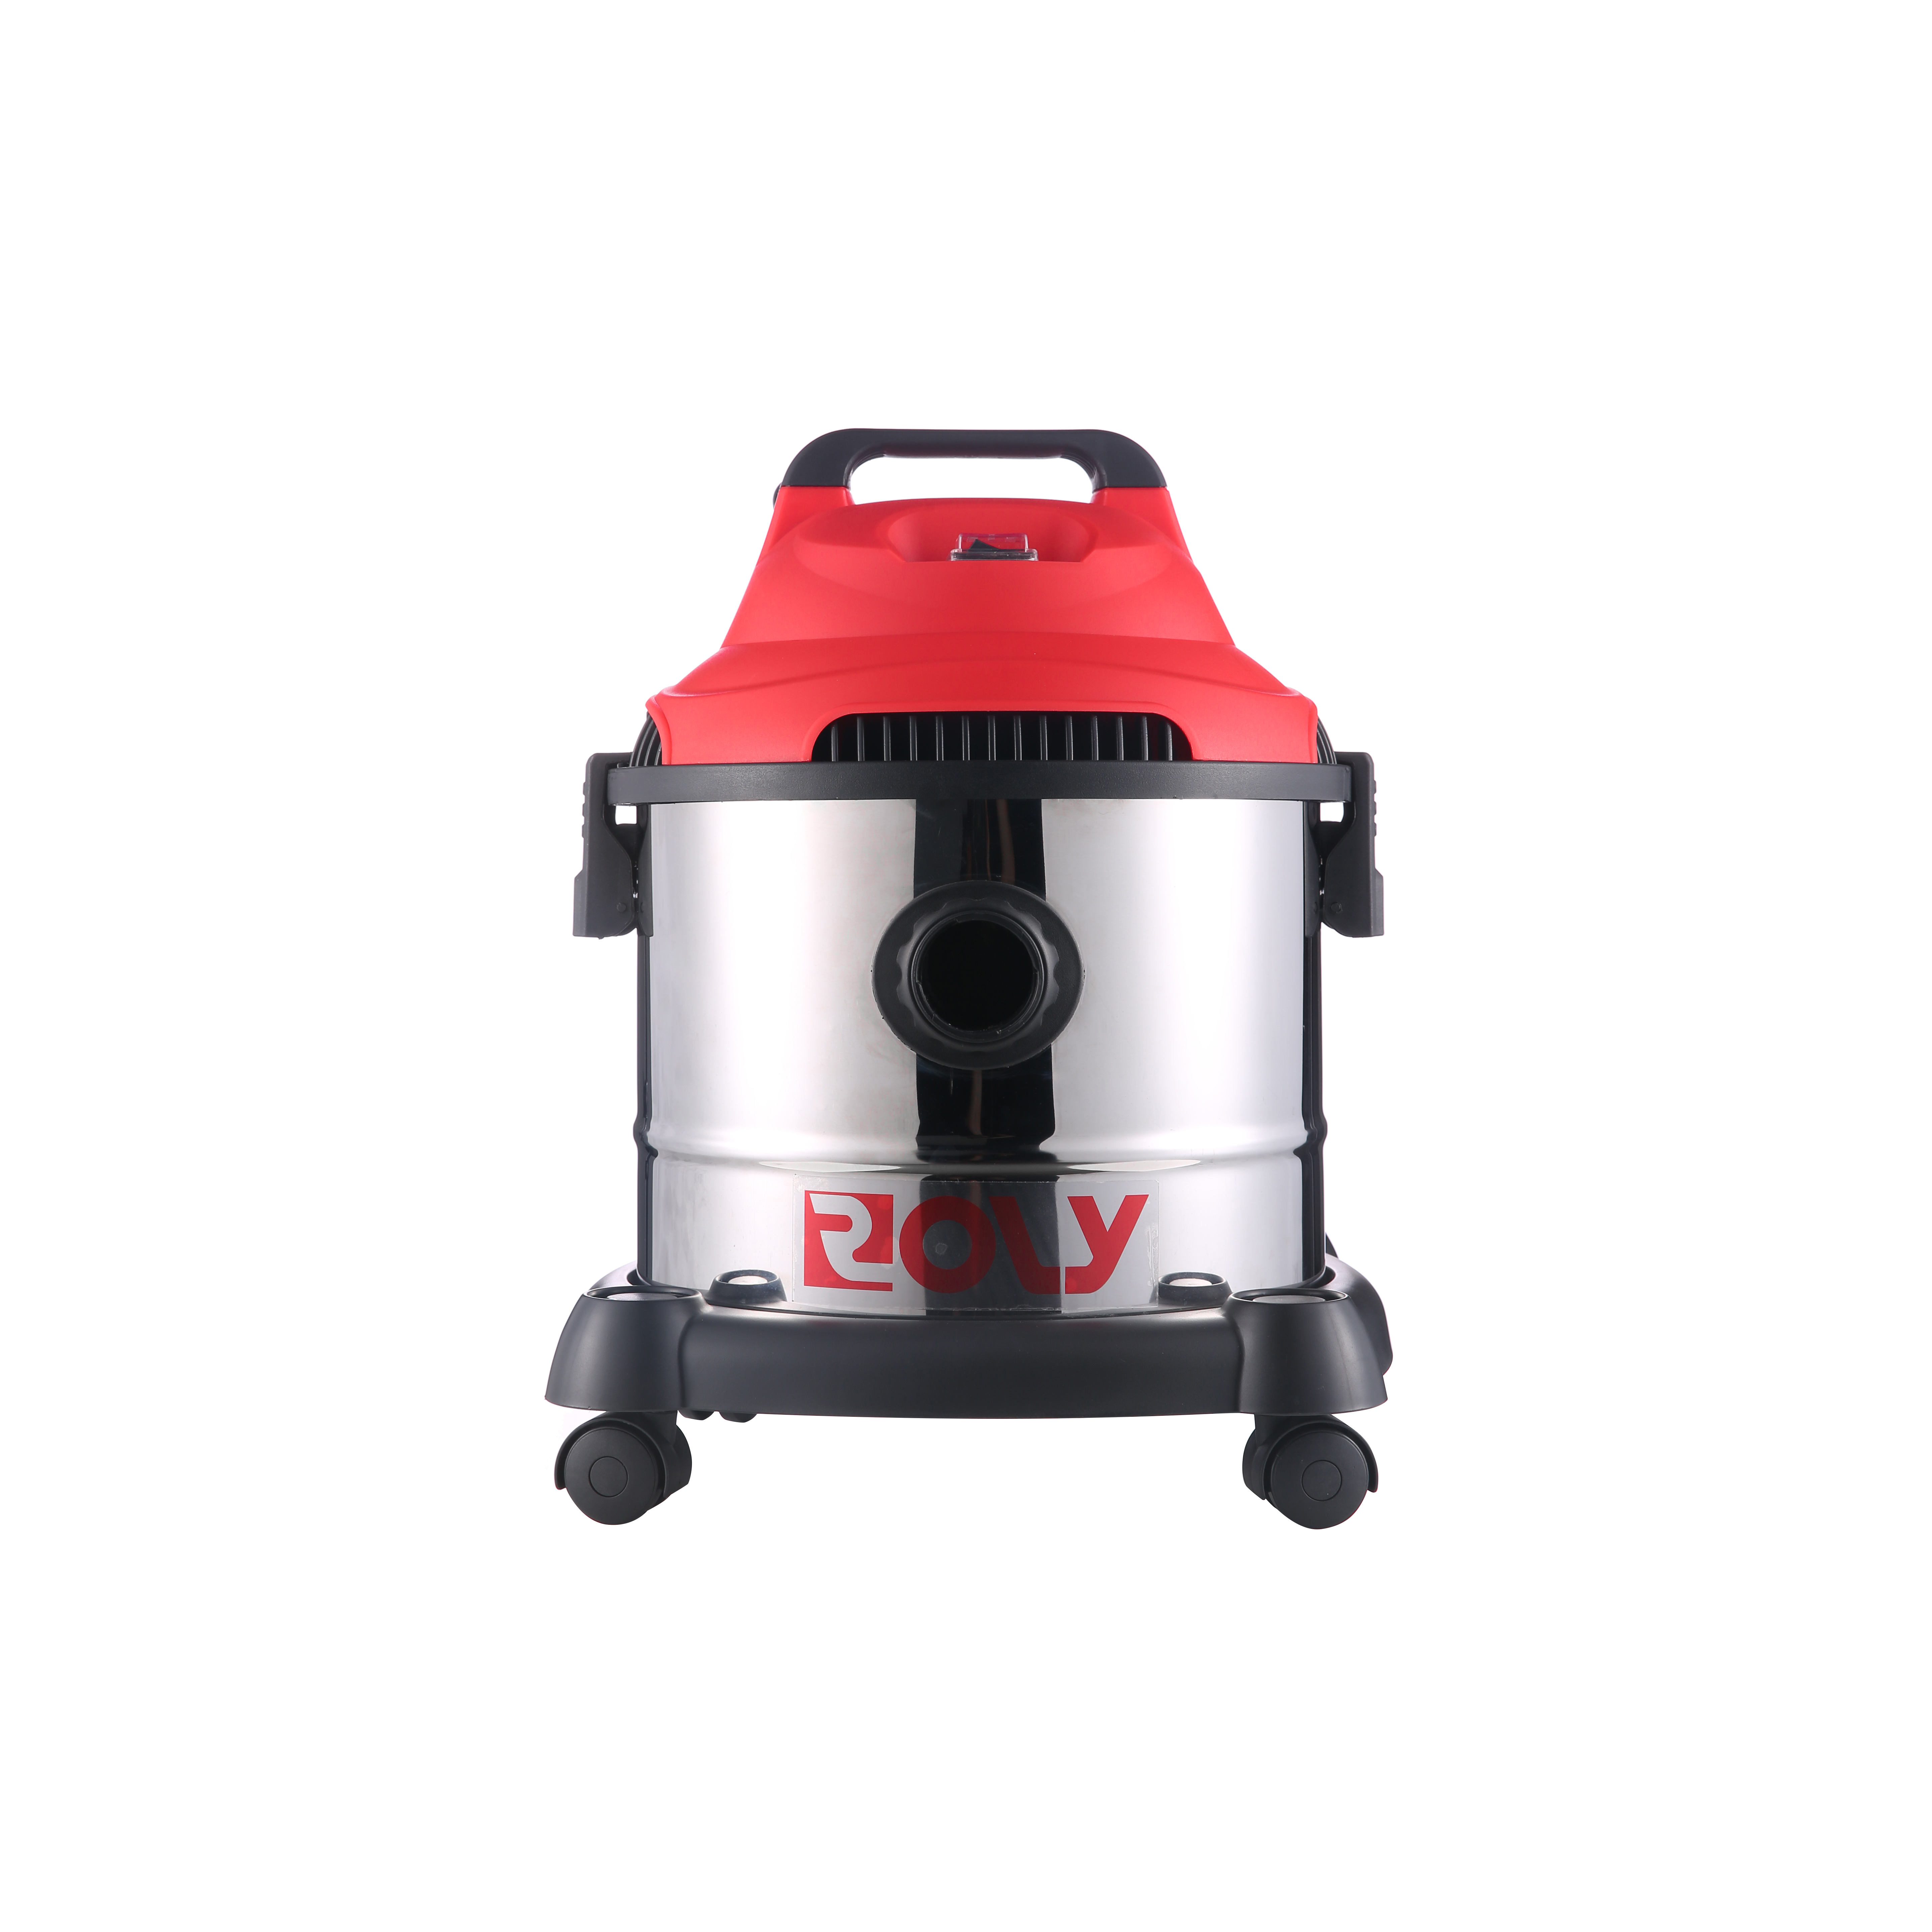 RL128 amazon top seller vacuum cleaner